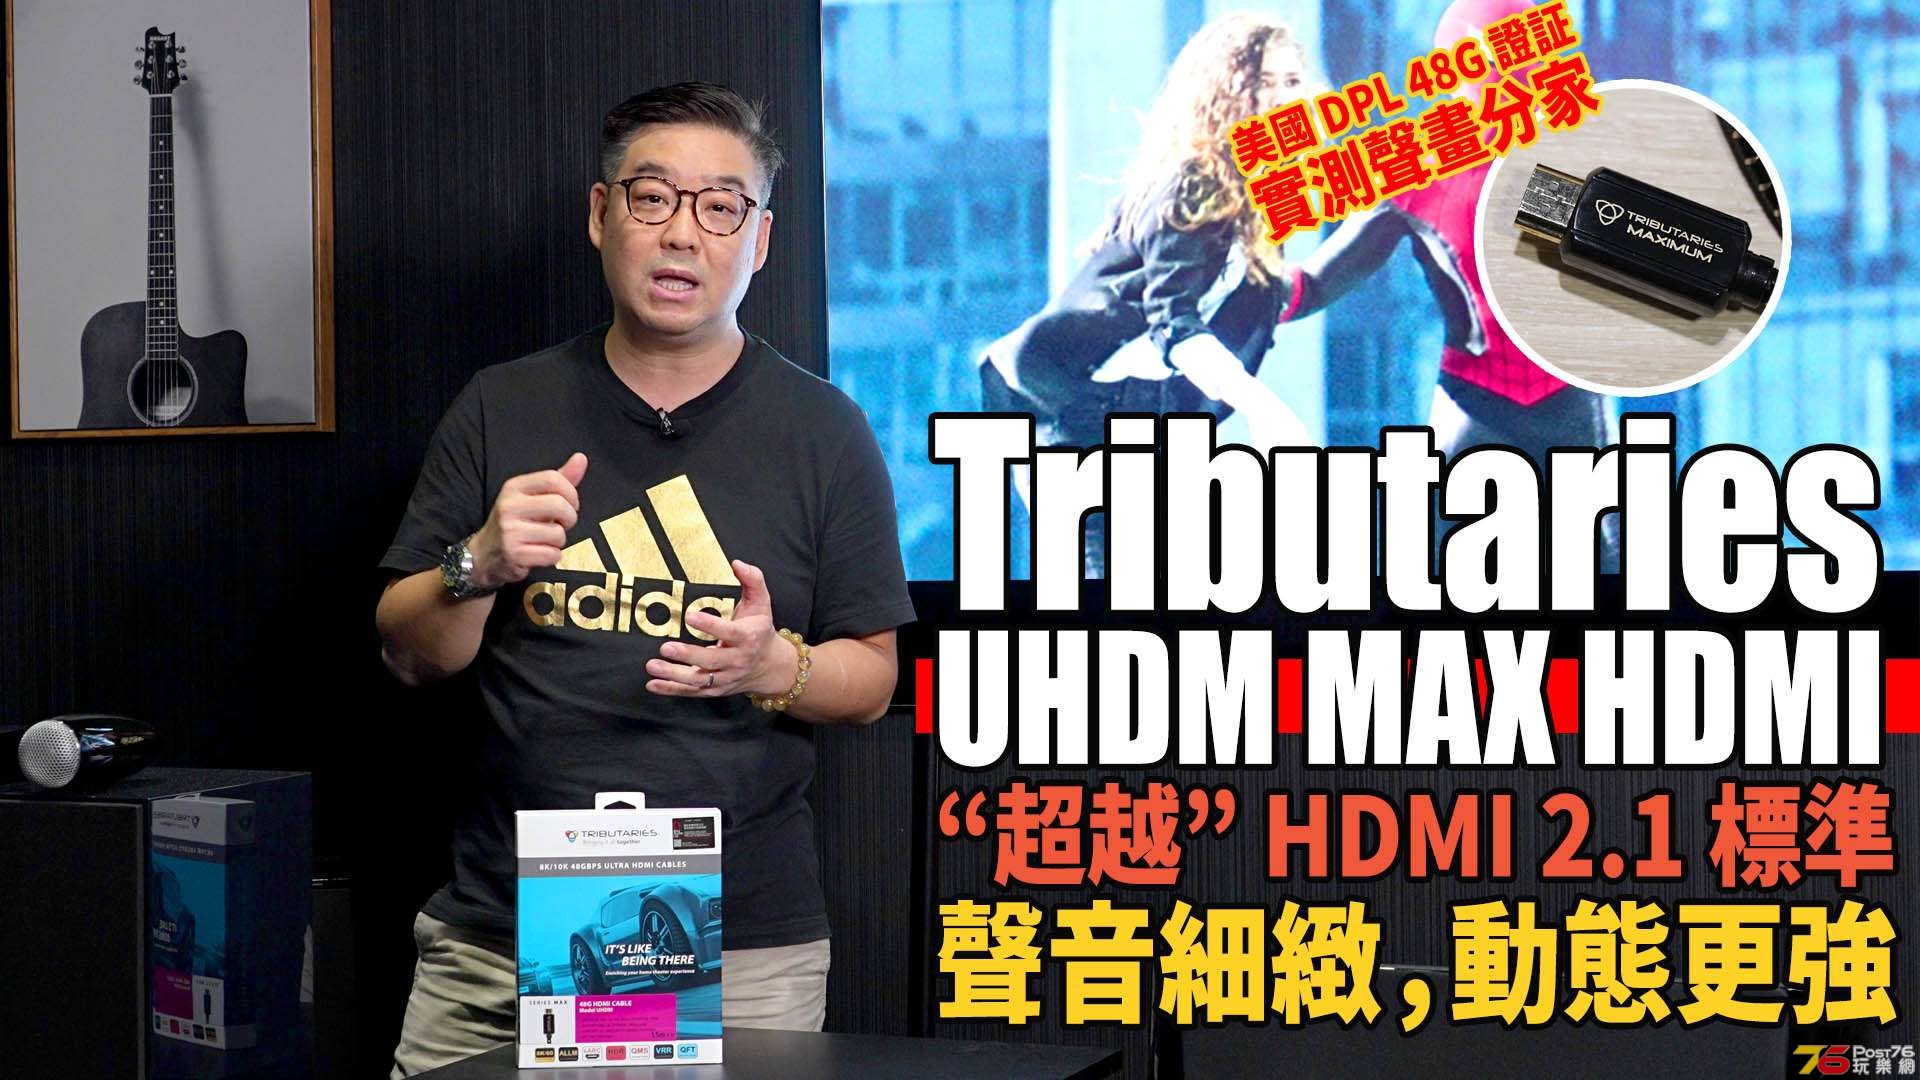 Tributaries UHDM MAX HDMI review forum copy.jpg